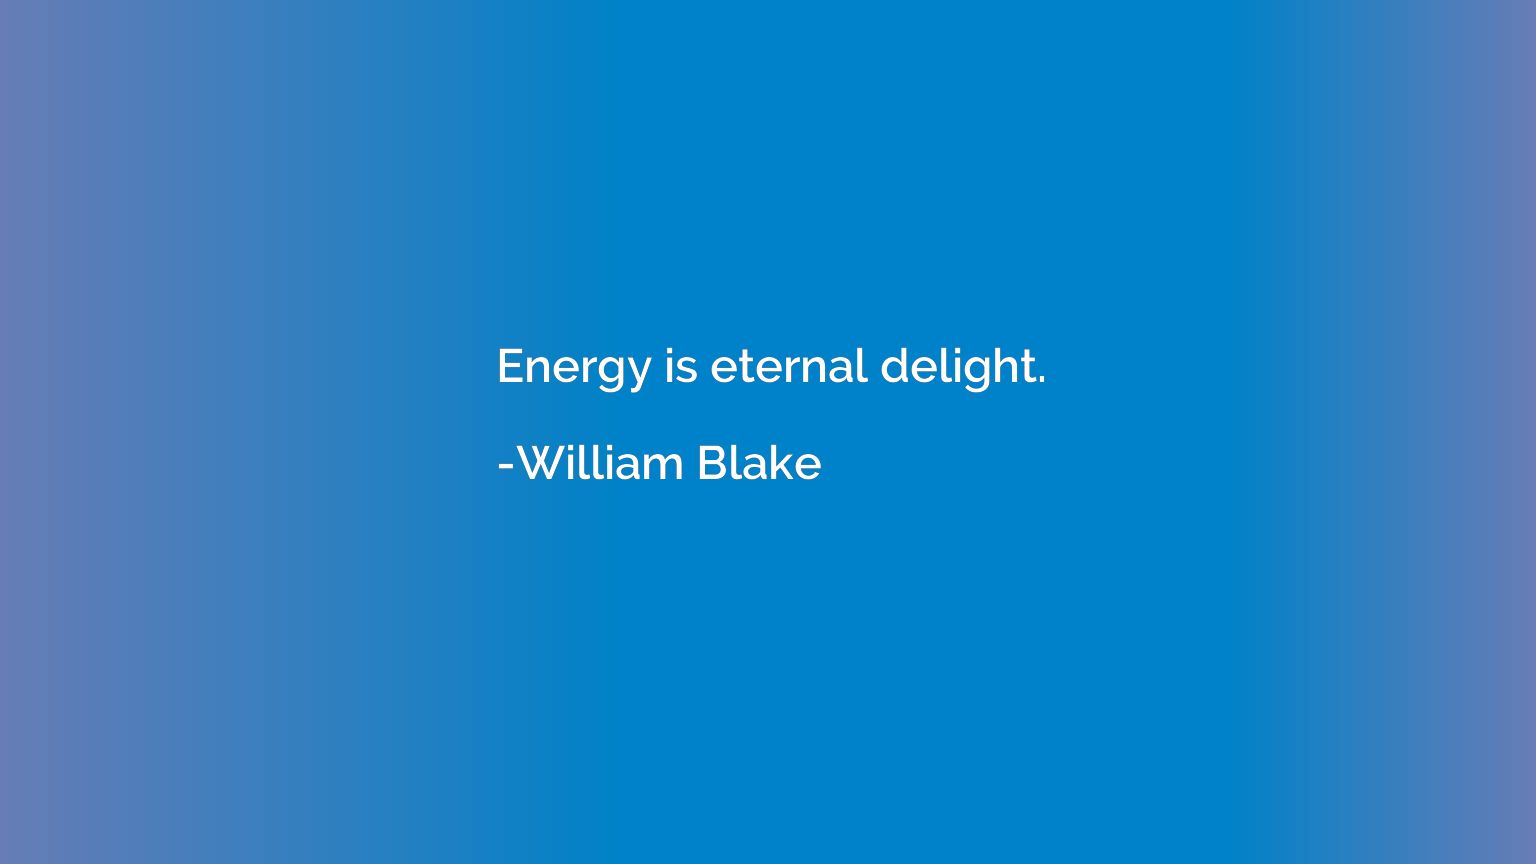 Energy is eternal delight.